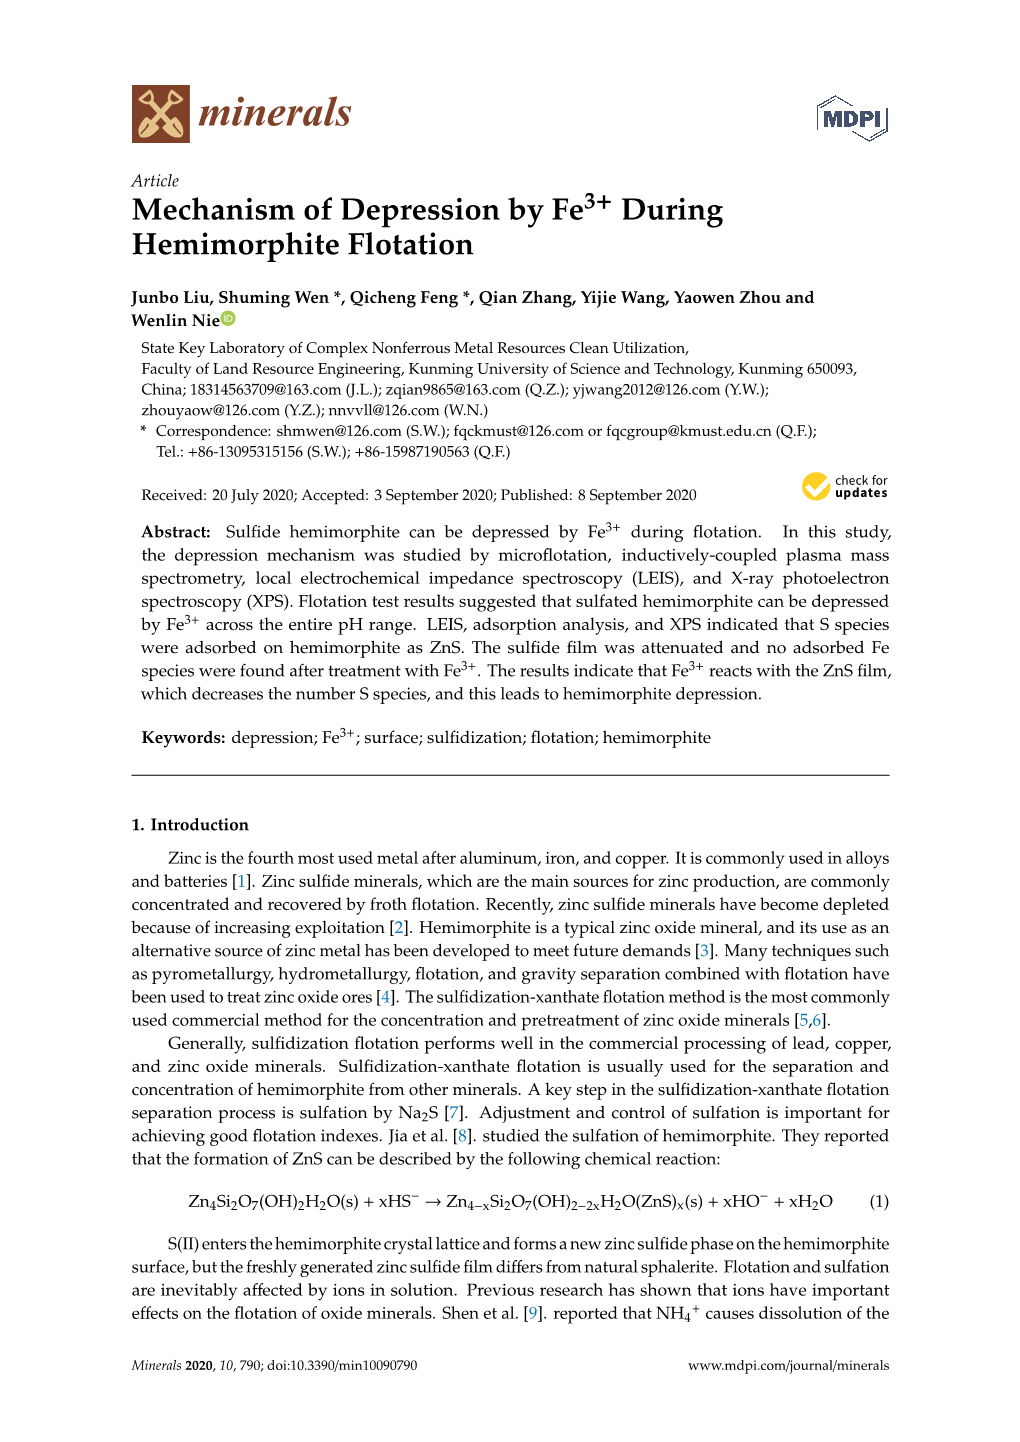 Mechanism of Depression by Fe3+ During Hemimorphite Flotation